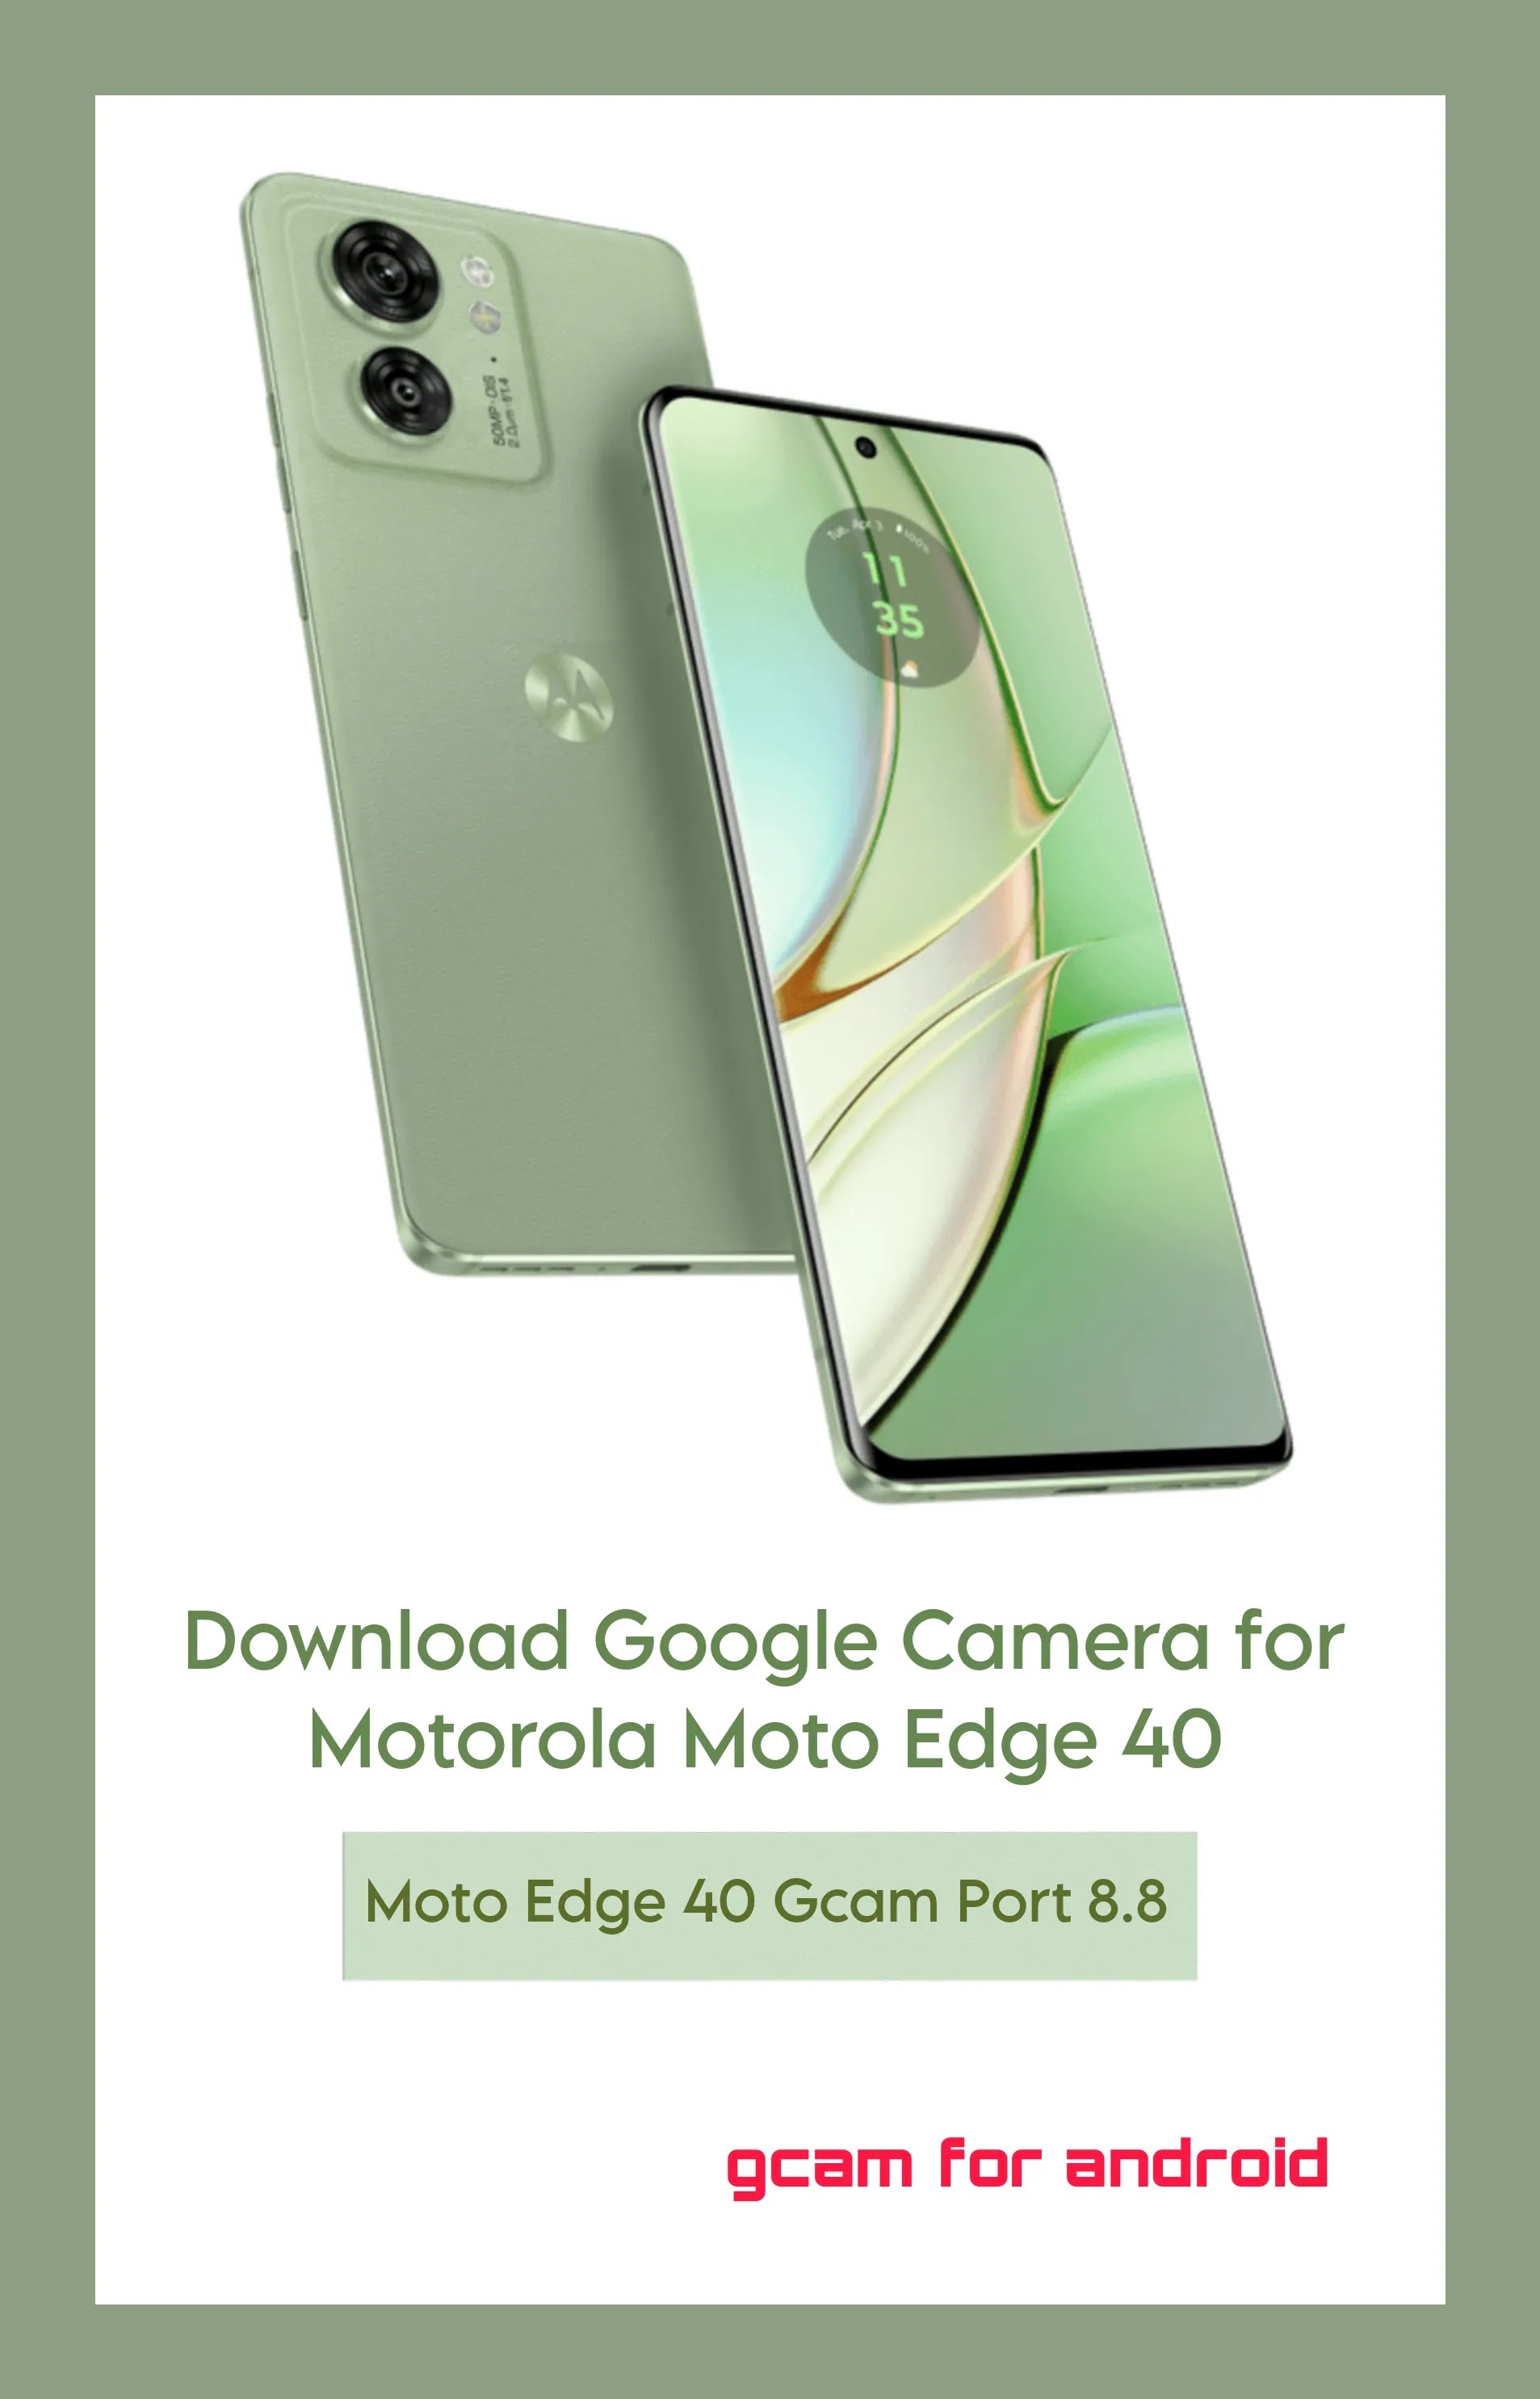 Motorola Moto Edge 40 Gcam port Download